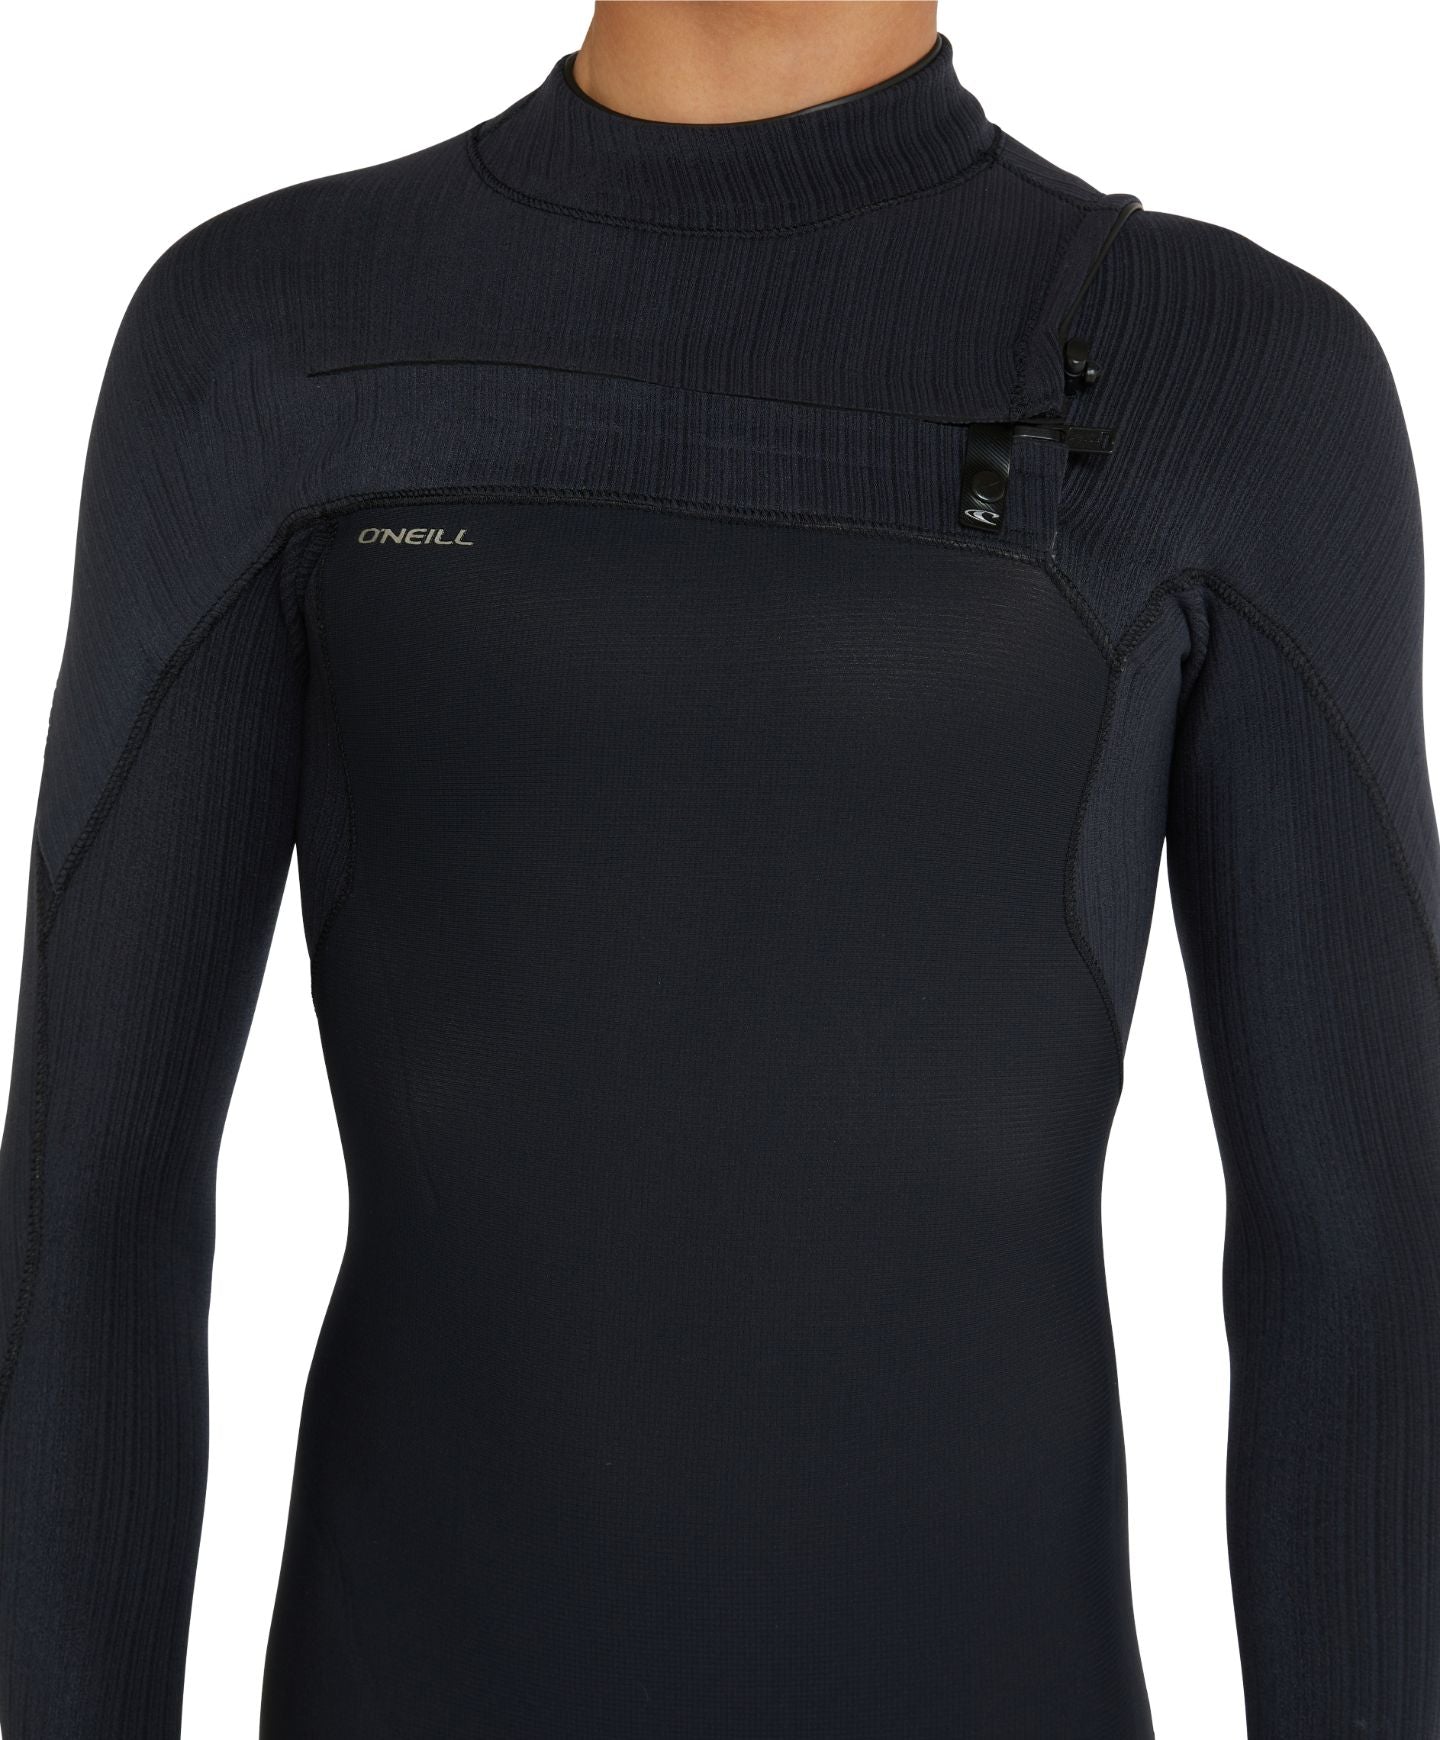 HyperFreak 4/3+ Steamer Chest Zip Wetsuit - Black